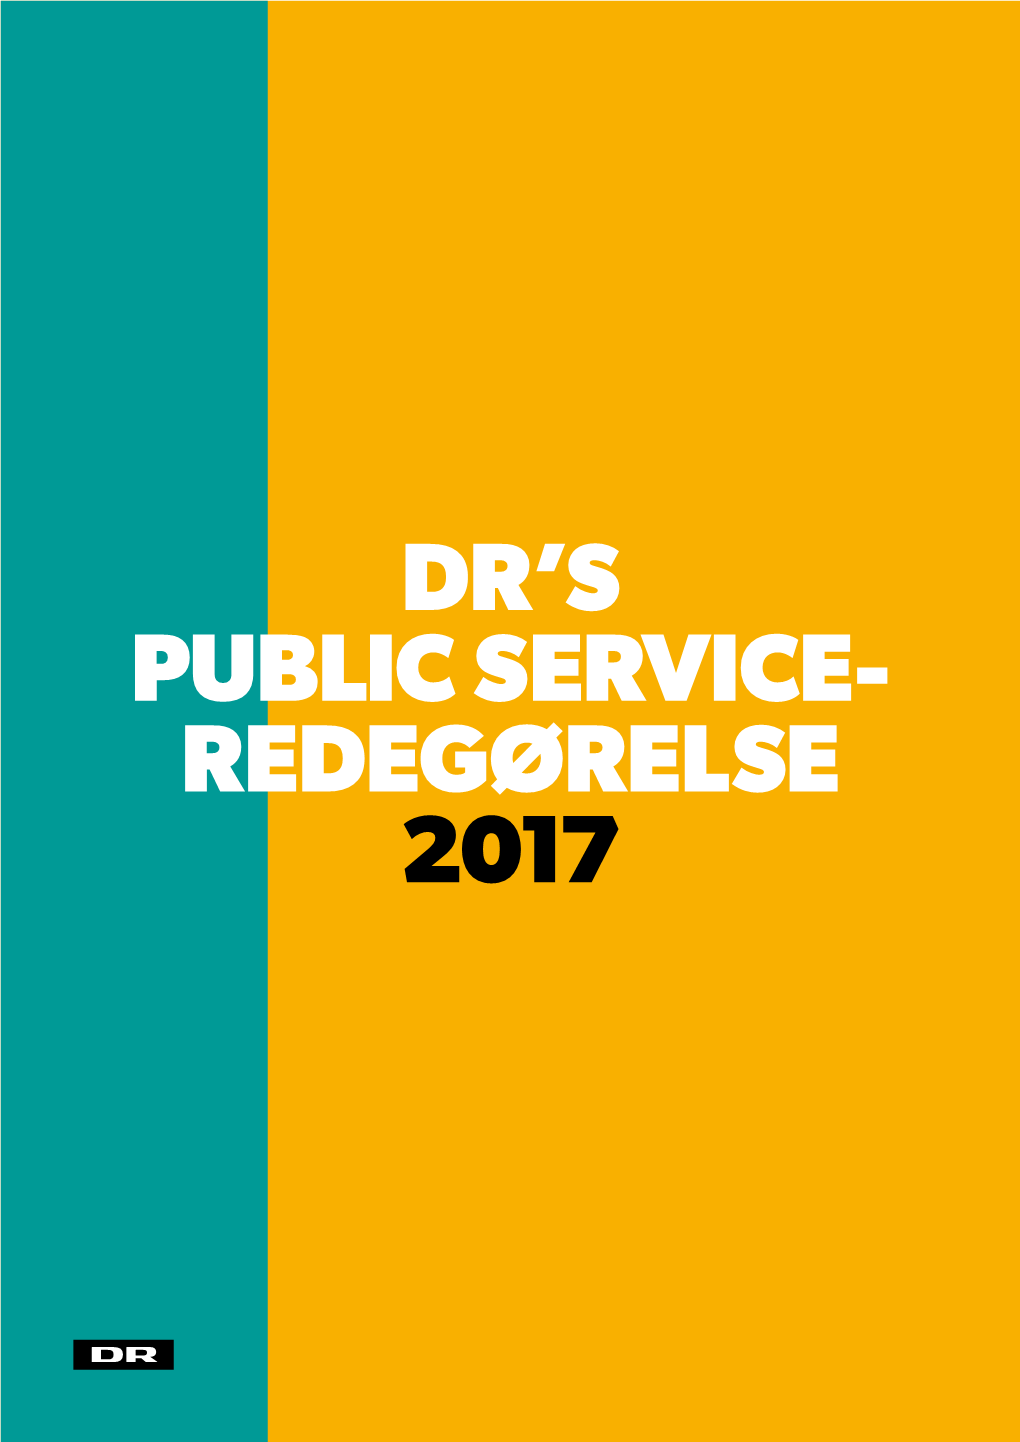 Dr's Public Service- Redegørelse 2017